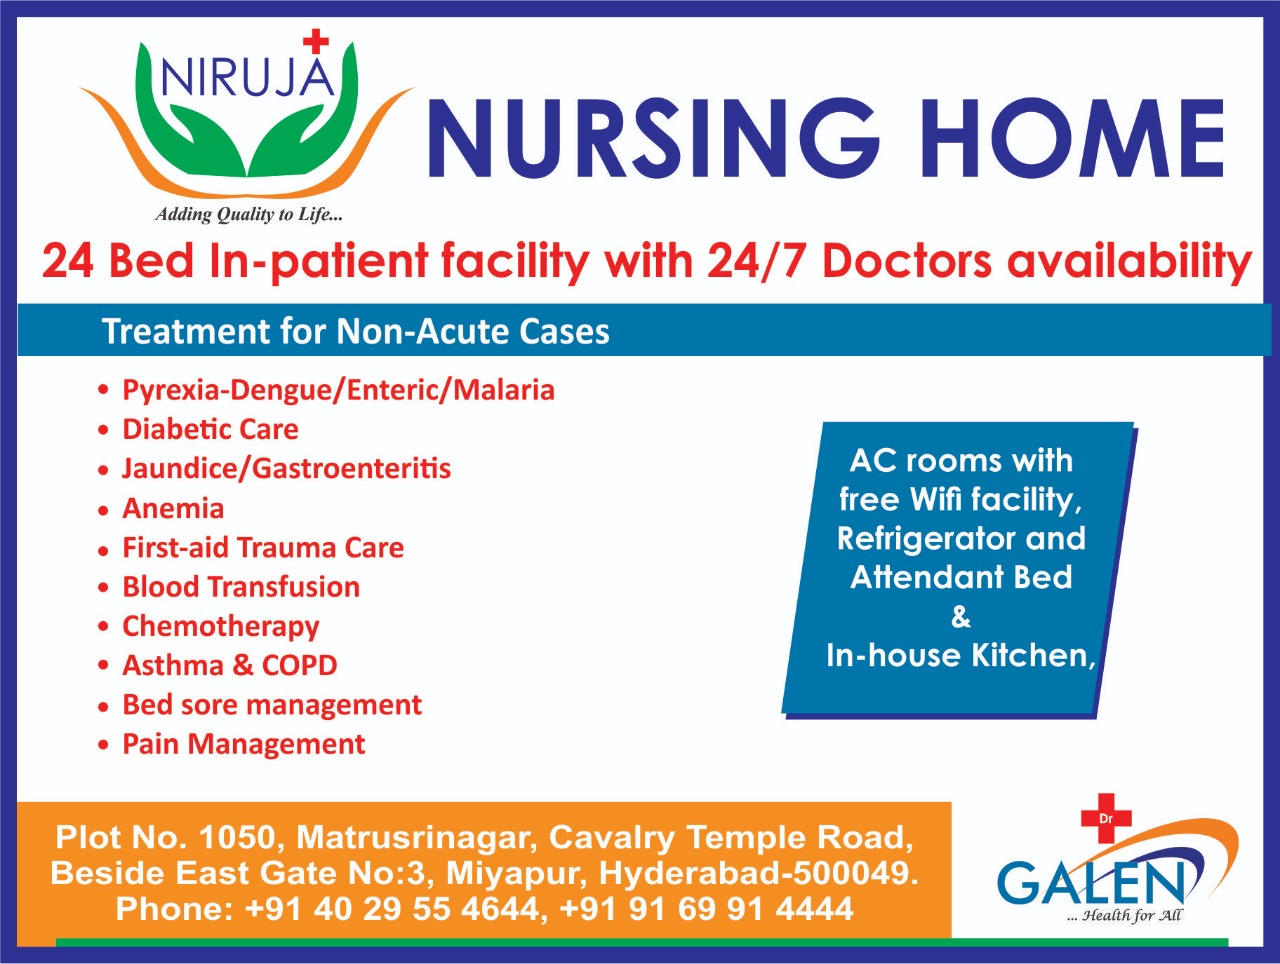 Nursing Home - Treatments